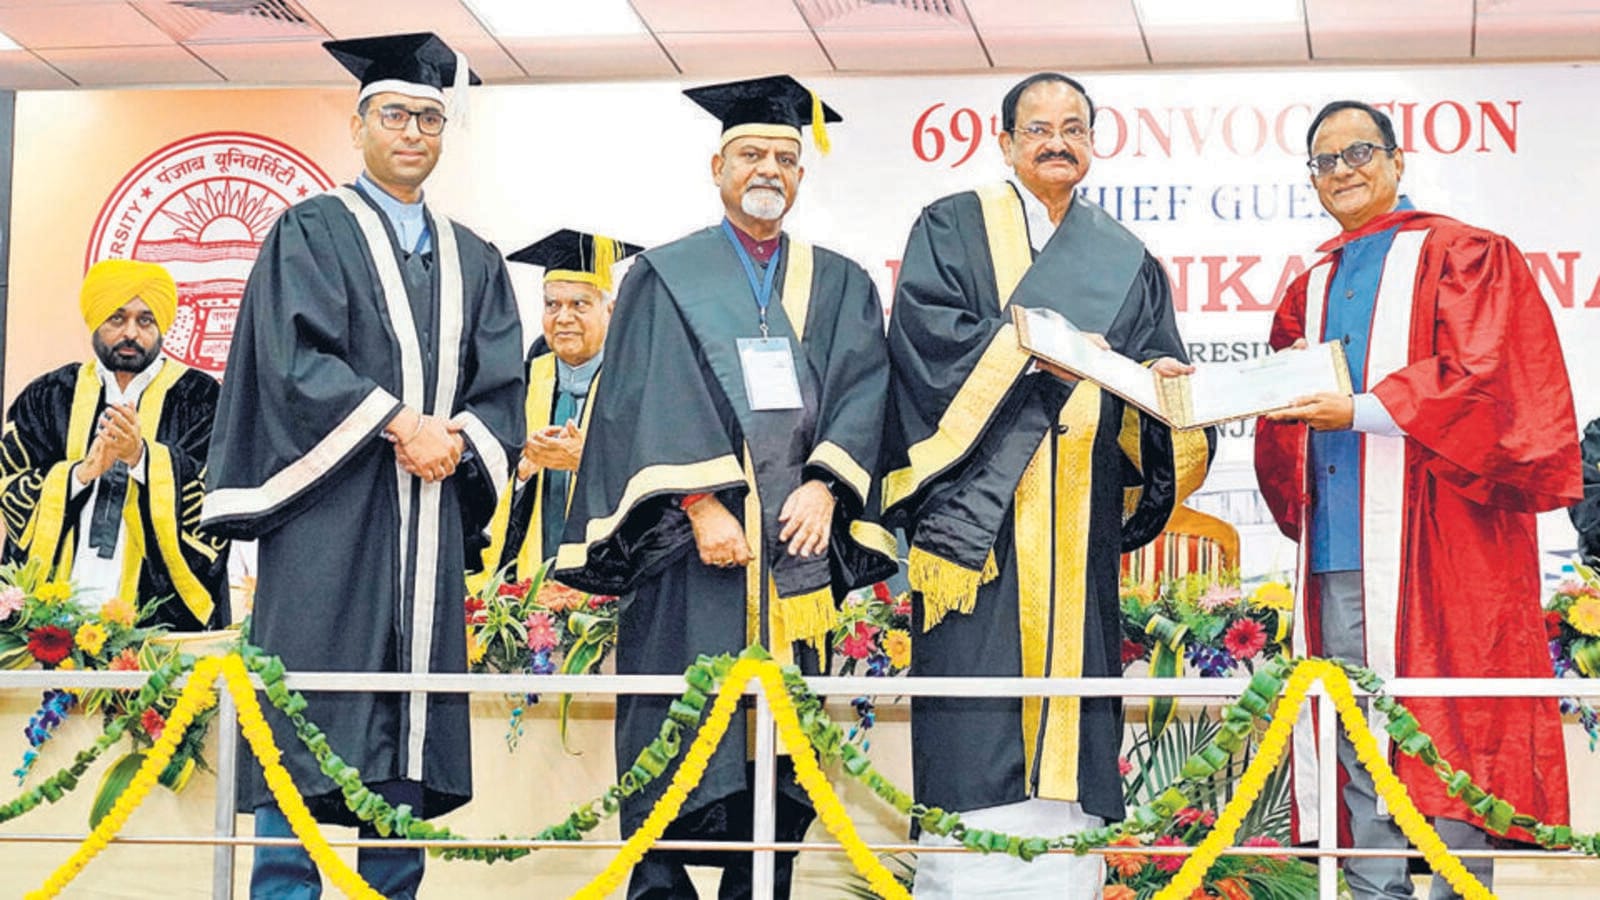 828 PhD scholars walk away with degrees at Panjab University’s 69th